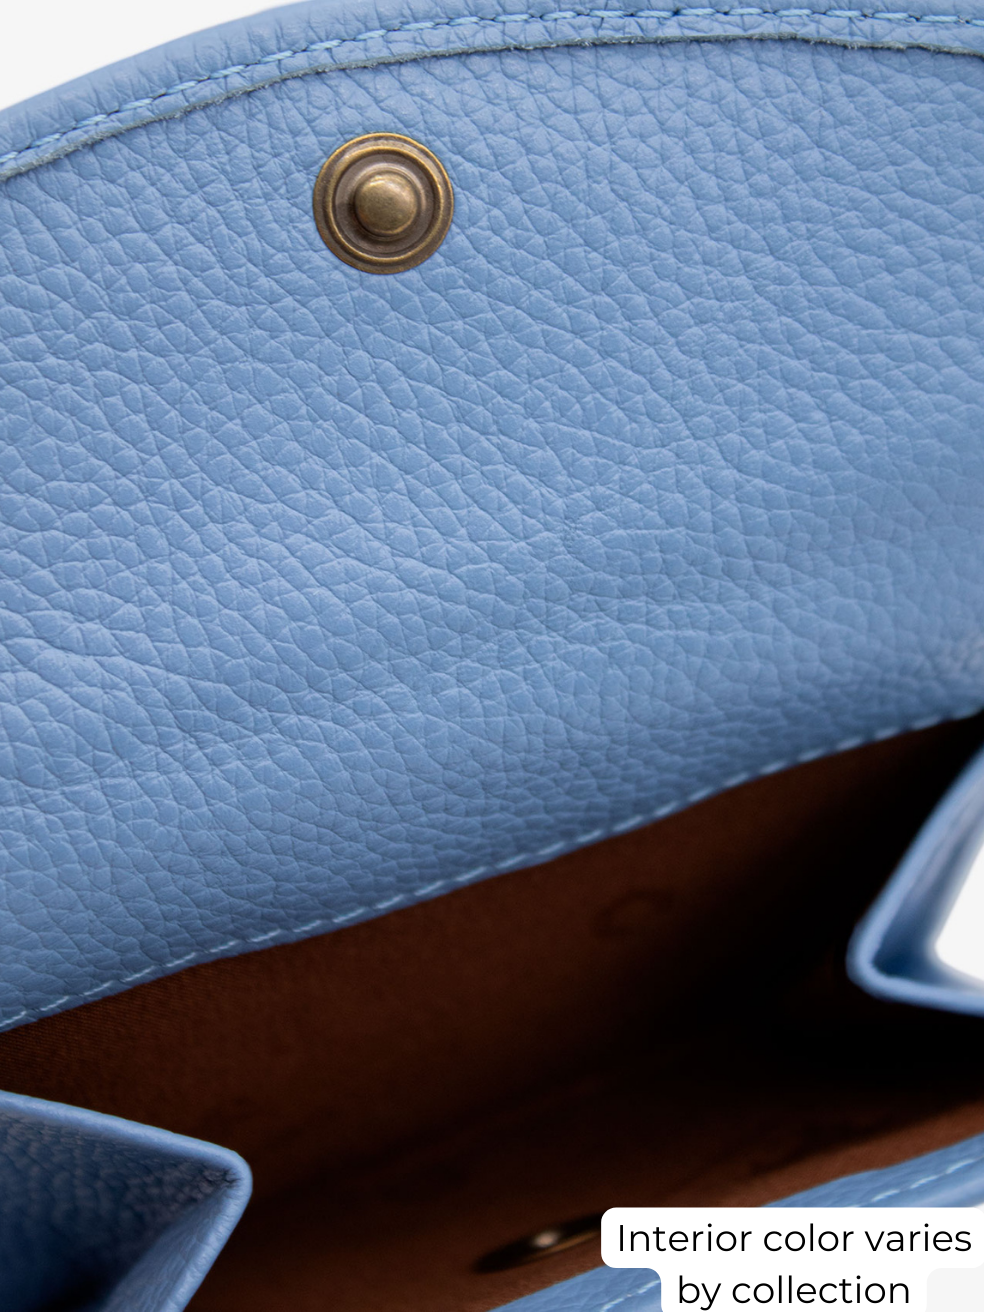 Cavalinho Gallop Mini Patent Leather Wallet - Blue - 28170530.03-Interior0530.10